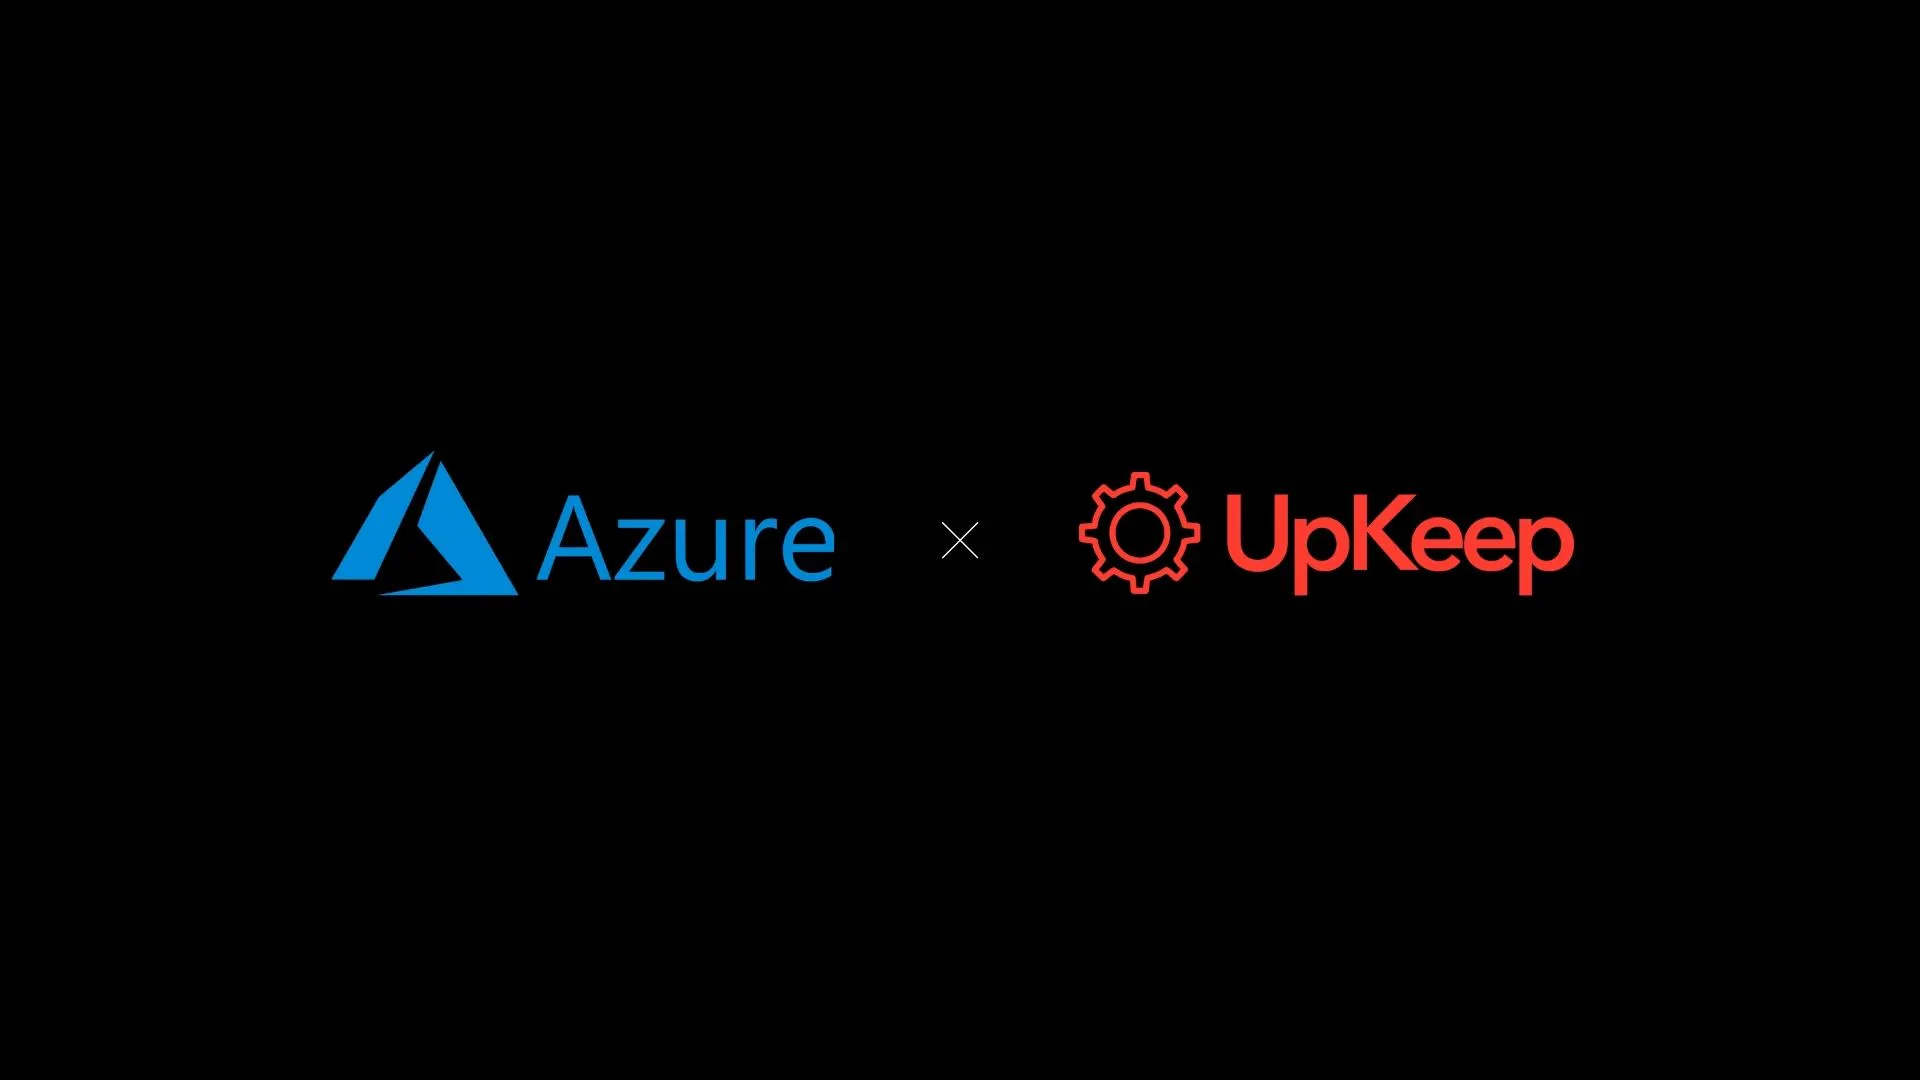 UpKeep Edge is powered by Microsoft Azure